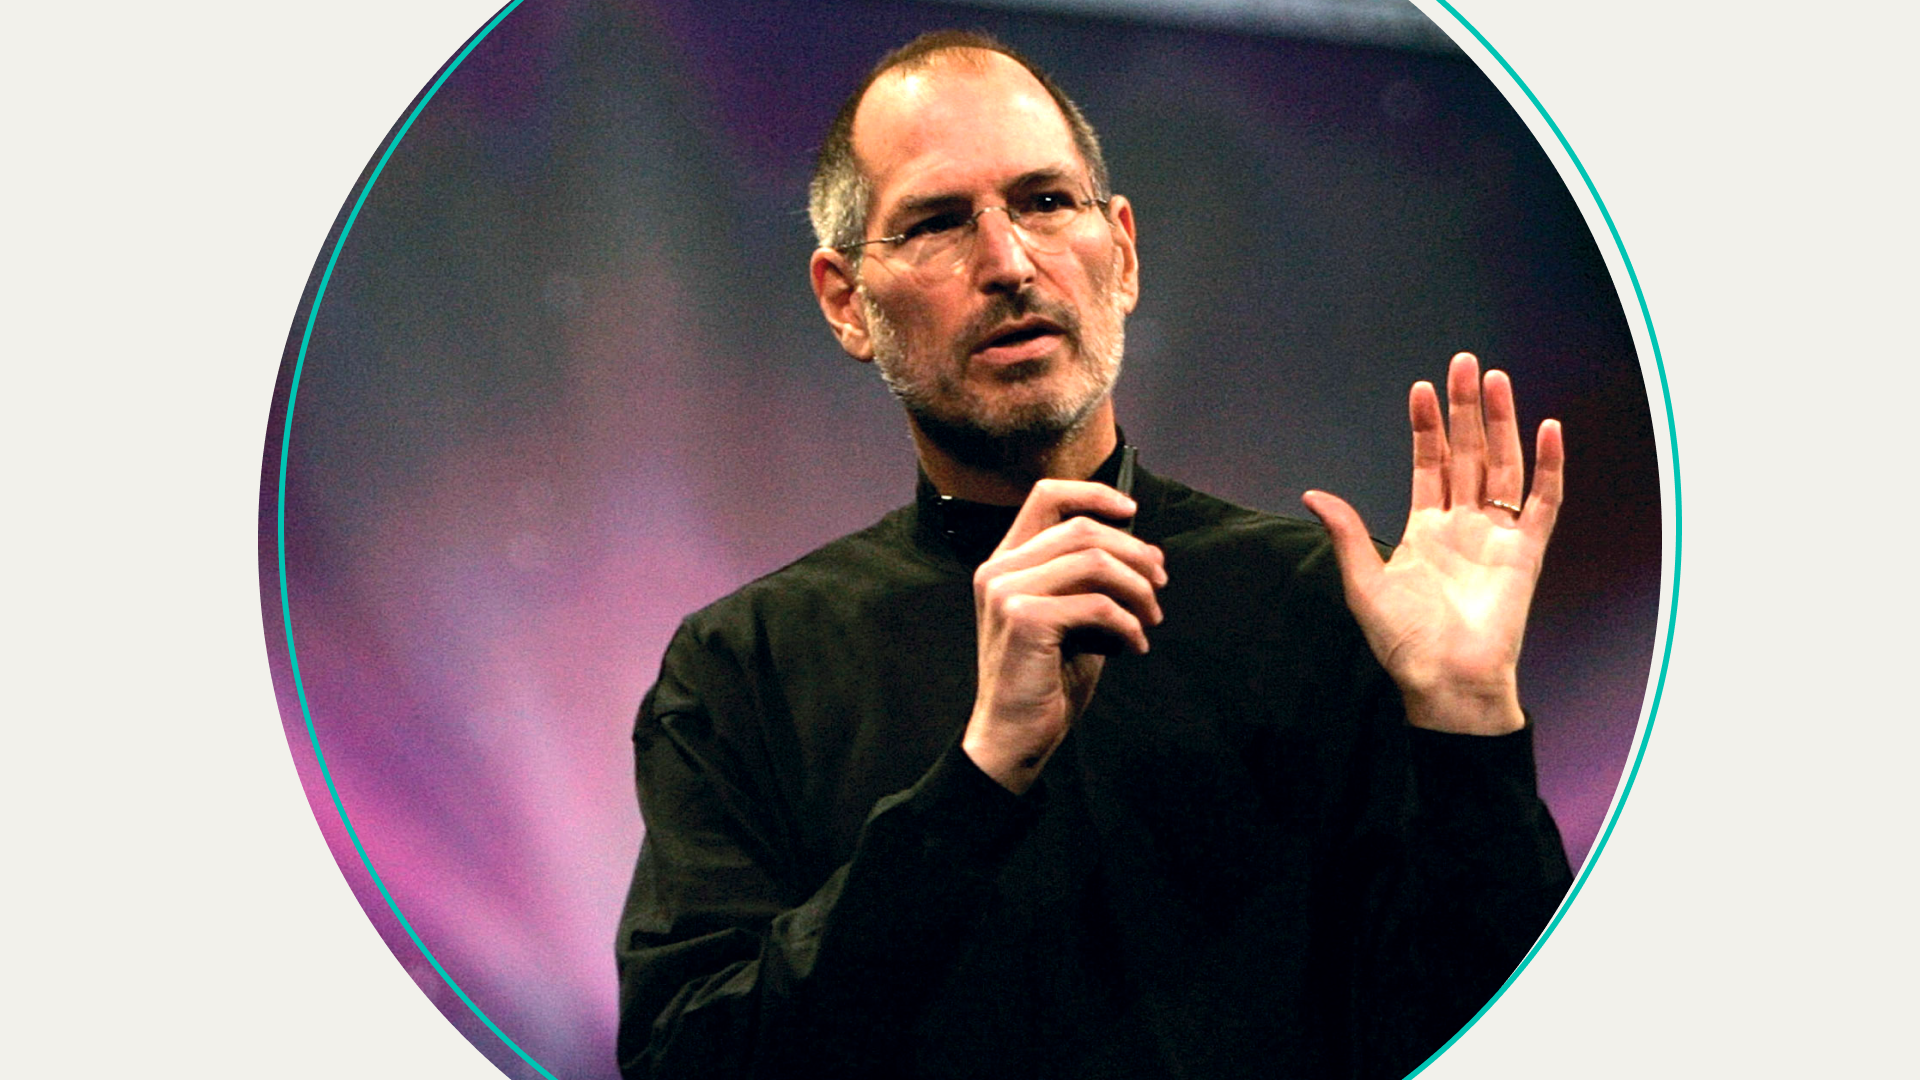 A photo of Steve Jobs